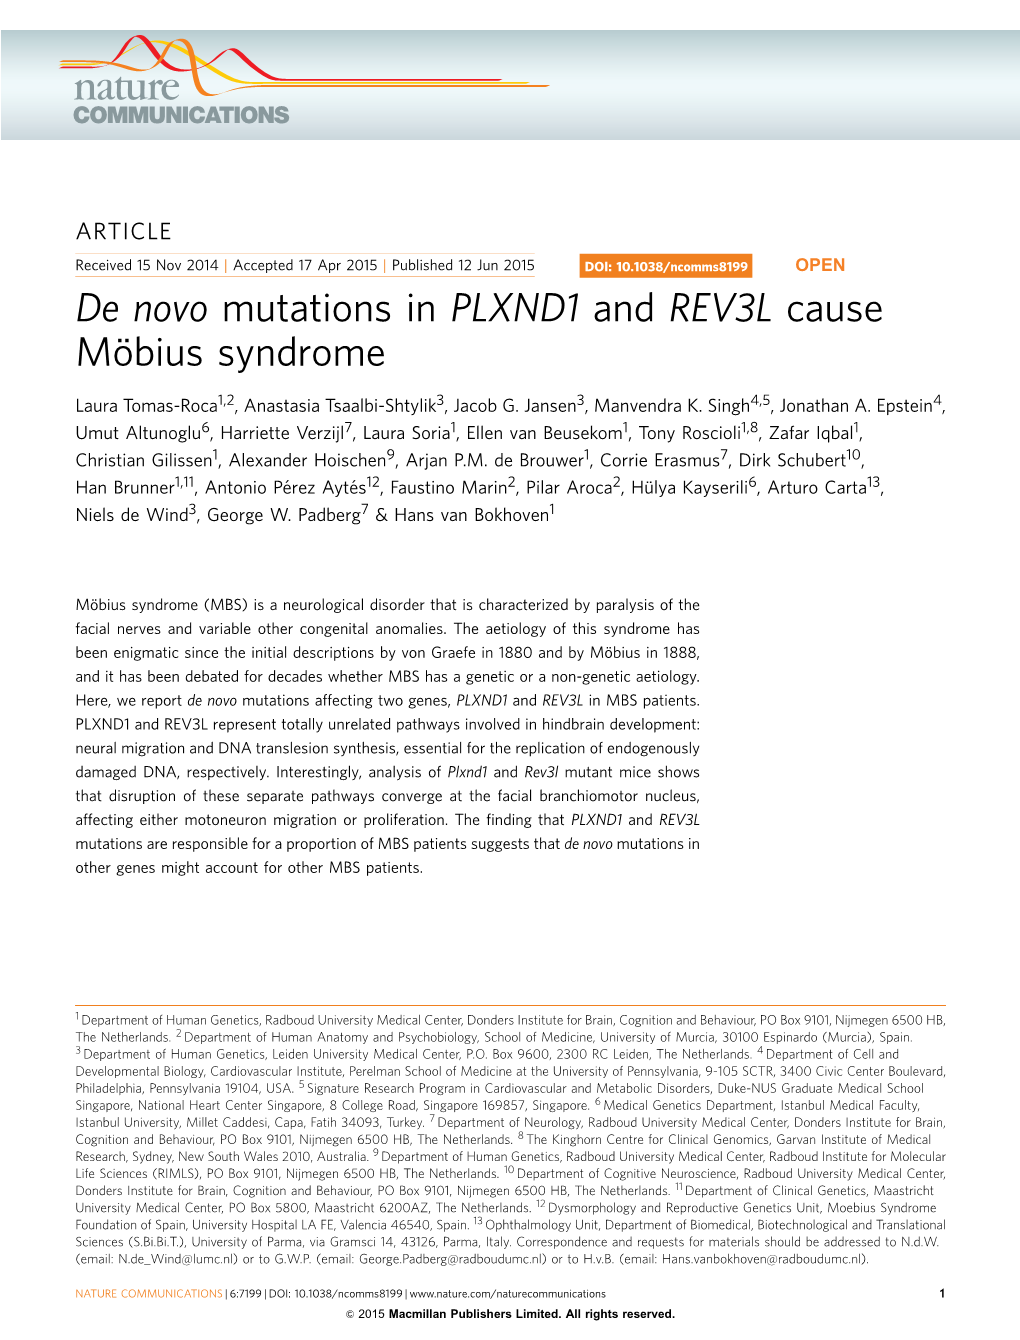 De Novo Mutations in PLXND1 and REV3L Cause M&Ouml;Bius Syndrome